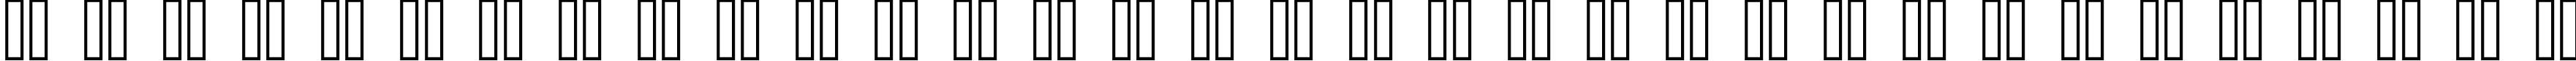 Пример написания русского алфавита шрифтом italic 08_56